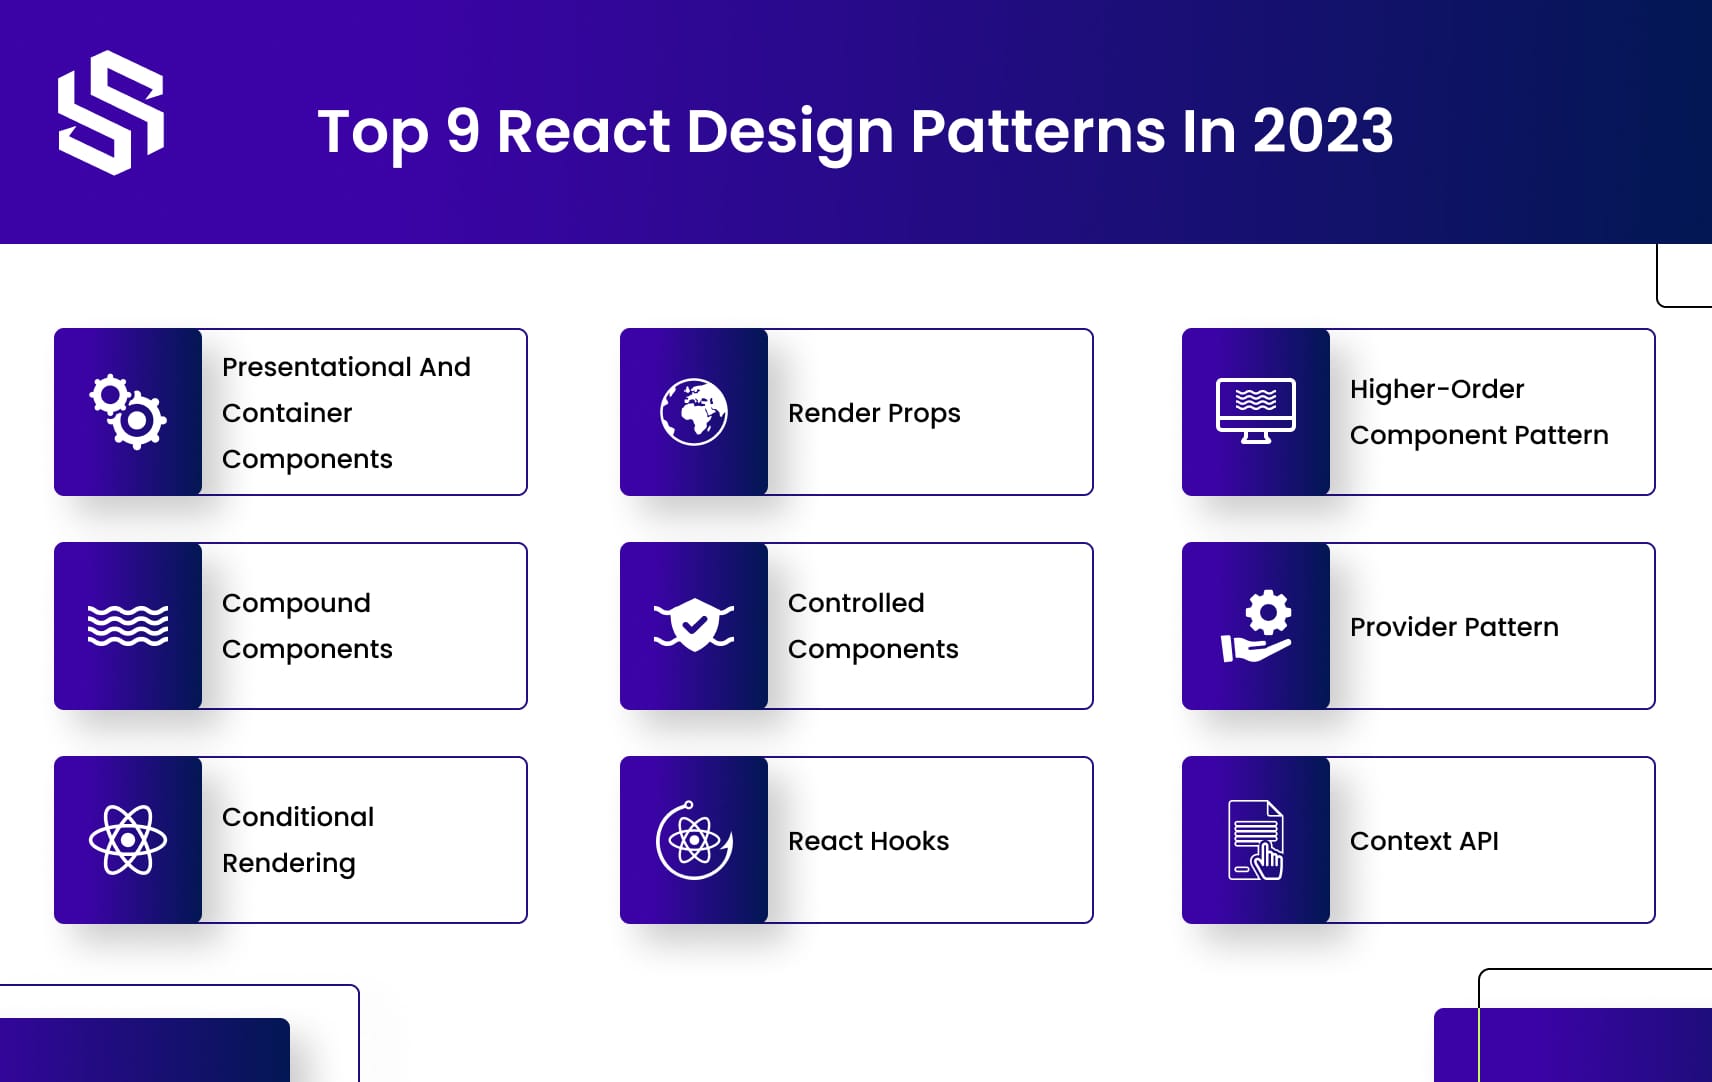 Top 9 React Design Patterns in 2023